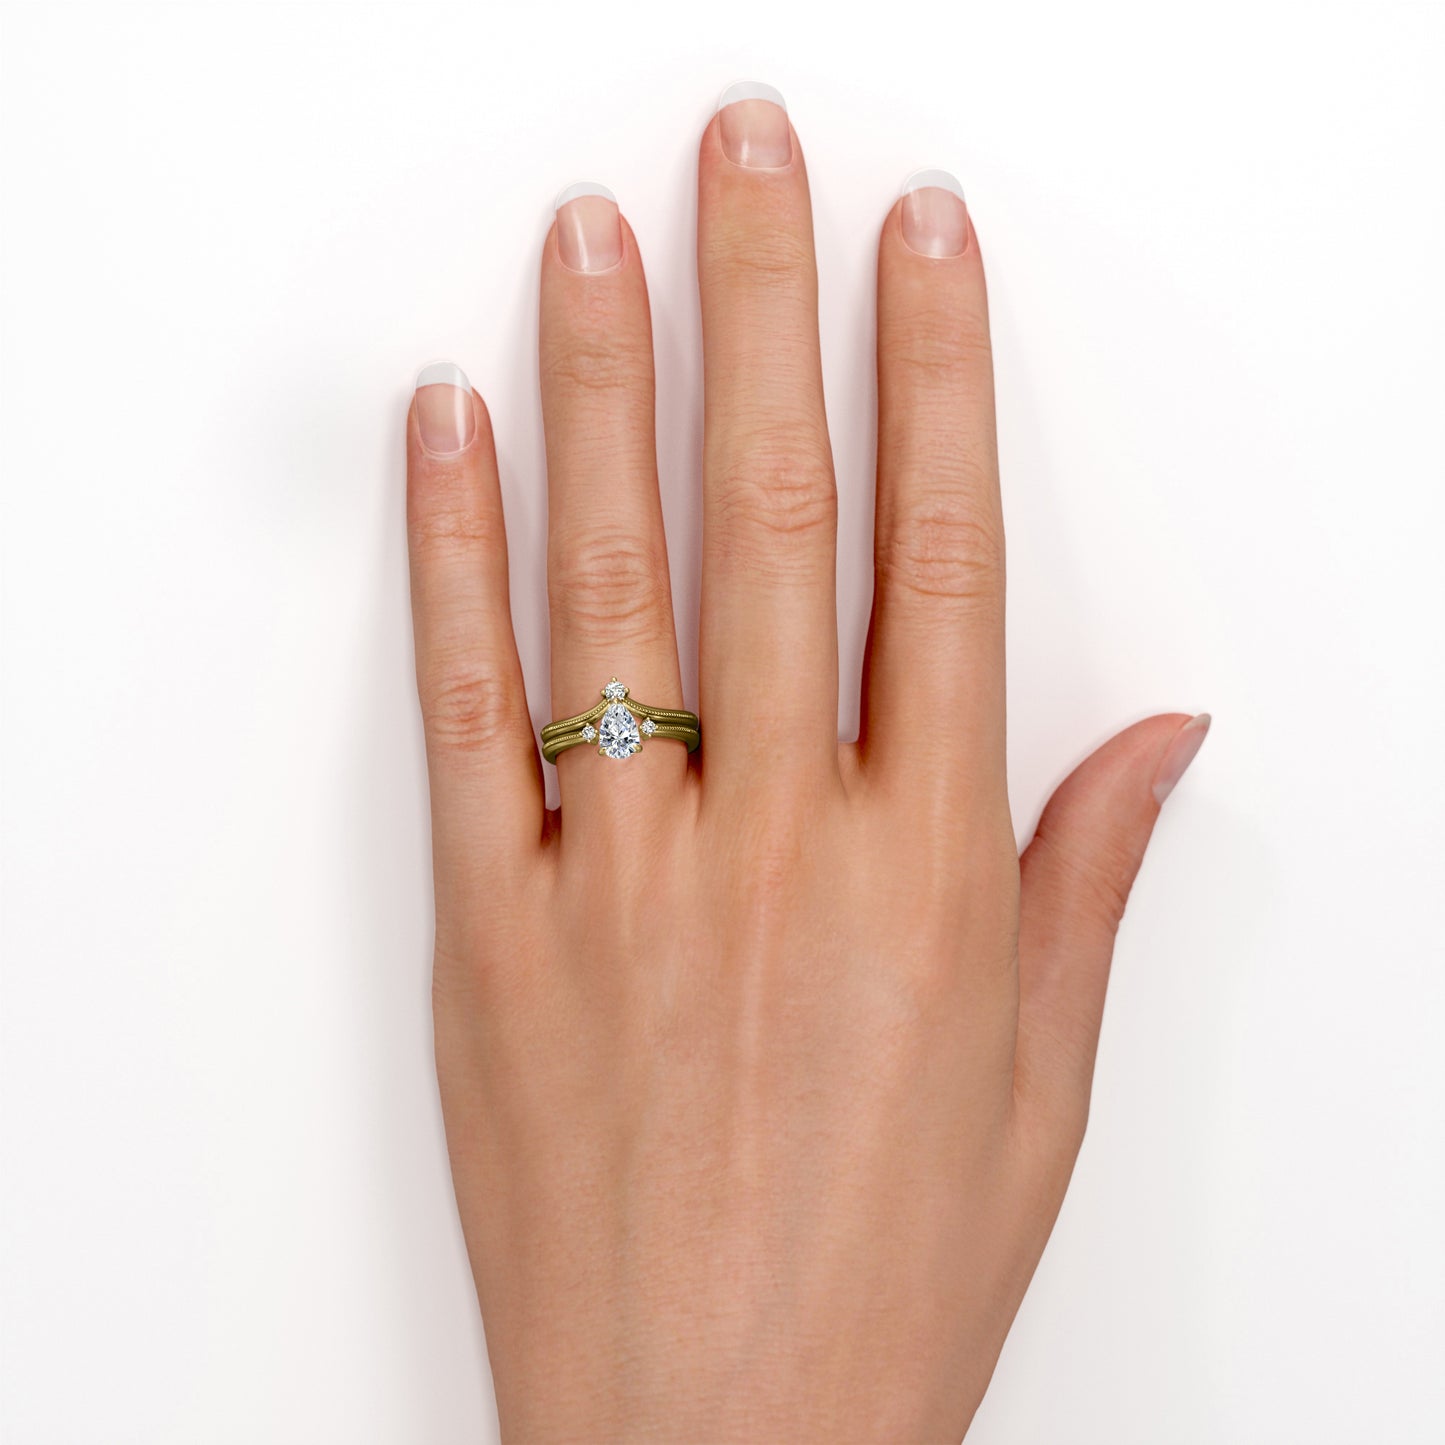 Chevron Tiara shaped 0.38 carat Milgrain border Pear cut diamond wedding set for women in Gold